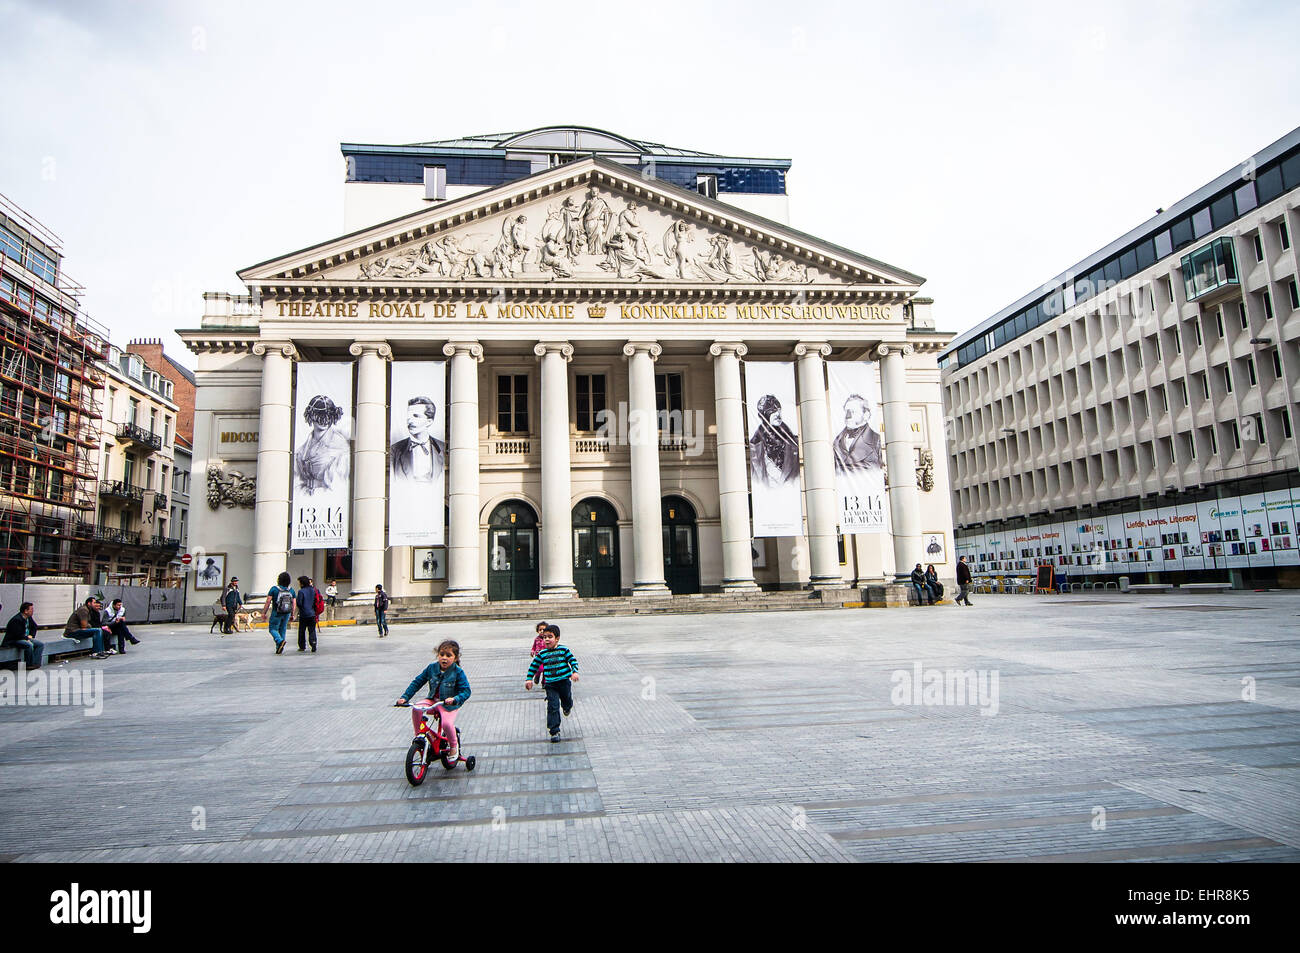 Theatre Royal De La Monnaie, historische Oper und Ballett-Theater in Brüssel, Belgien. Stockfoto